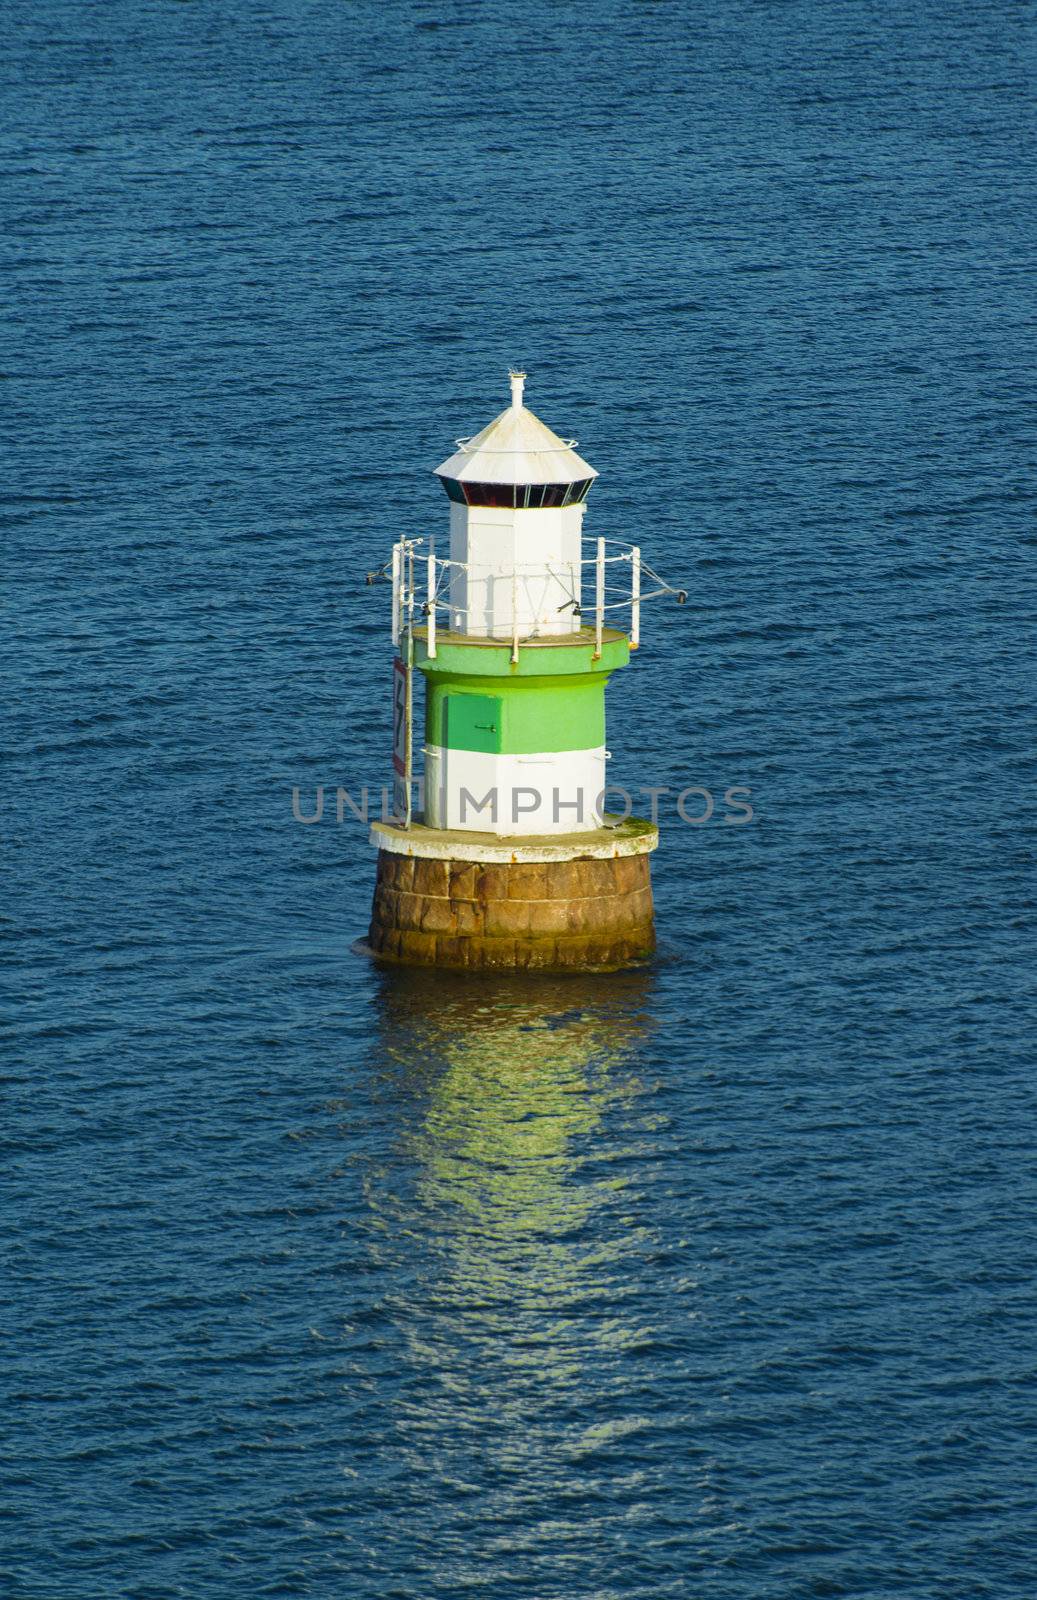 Navigation beacon in the Baltic sea